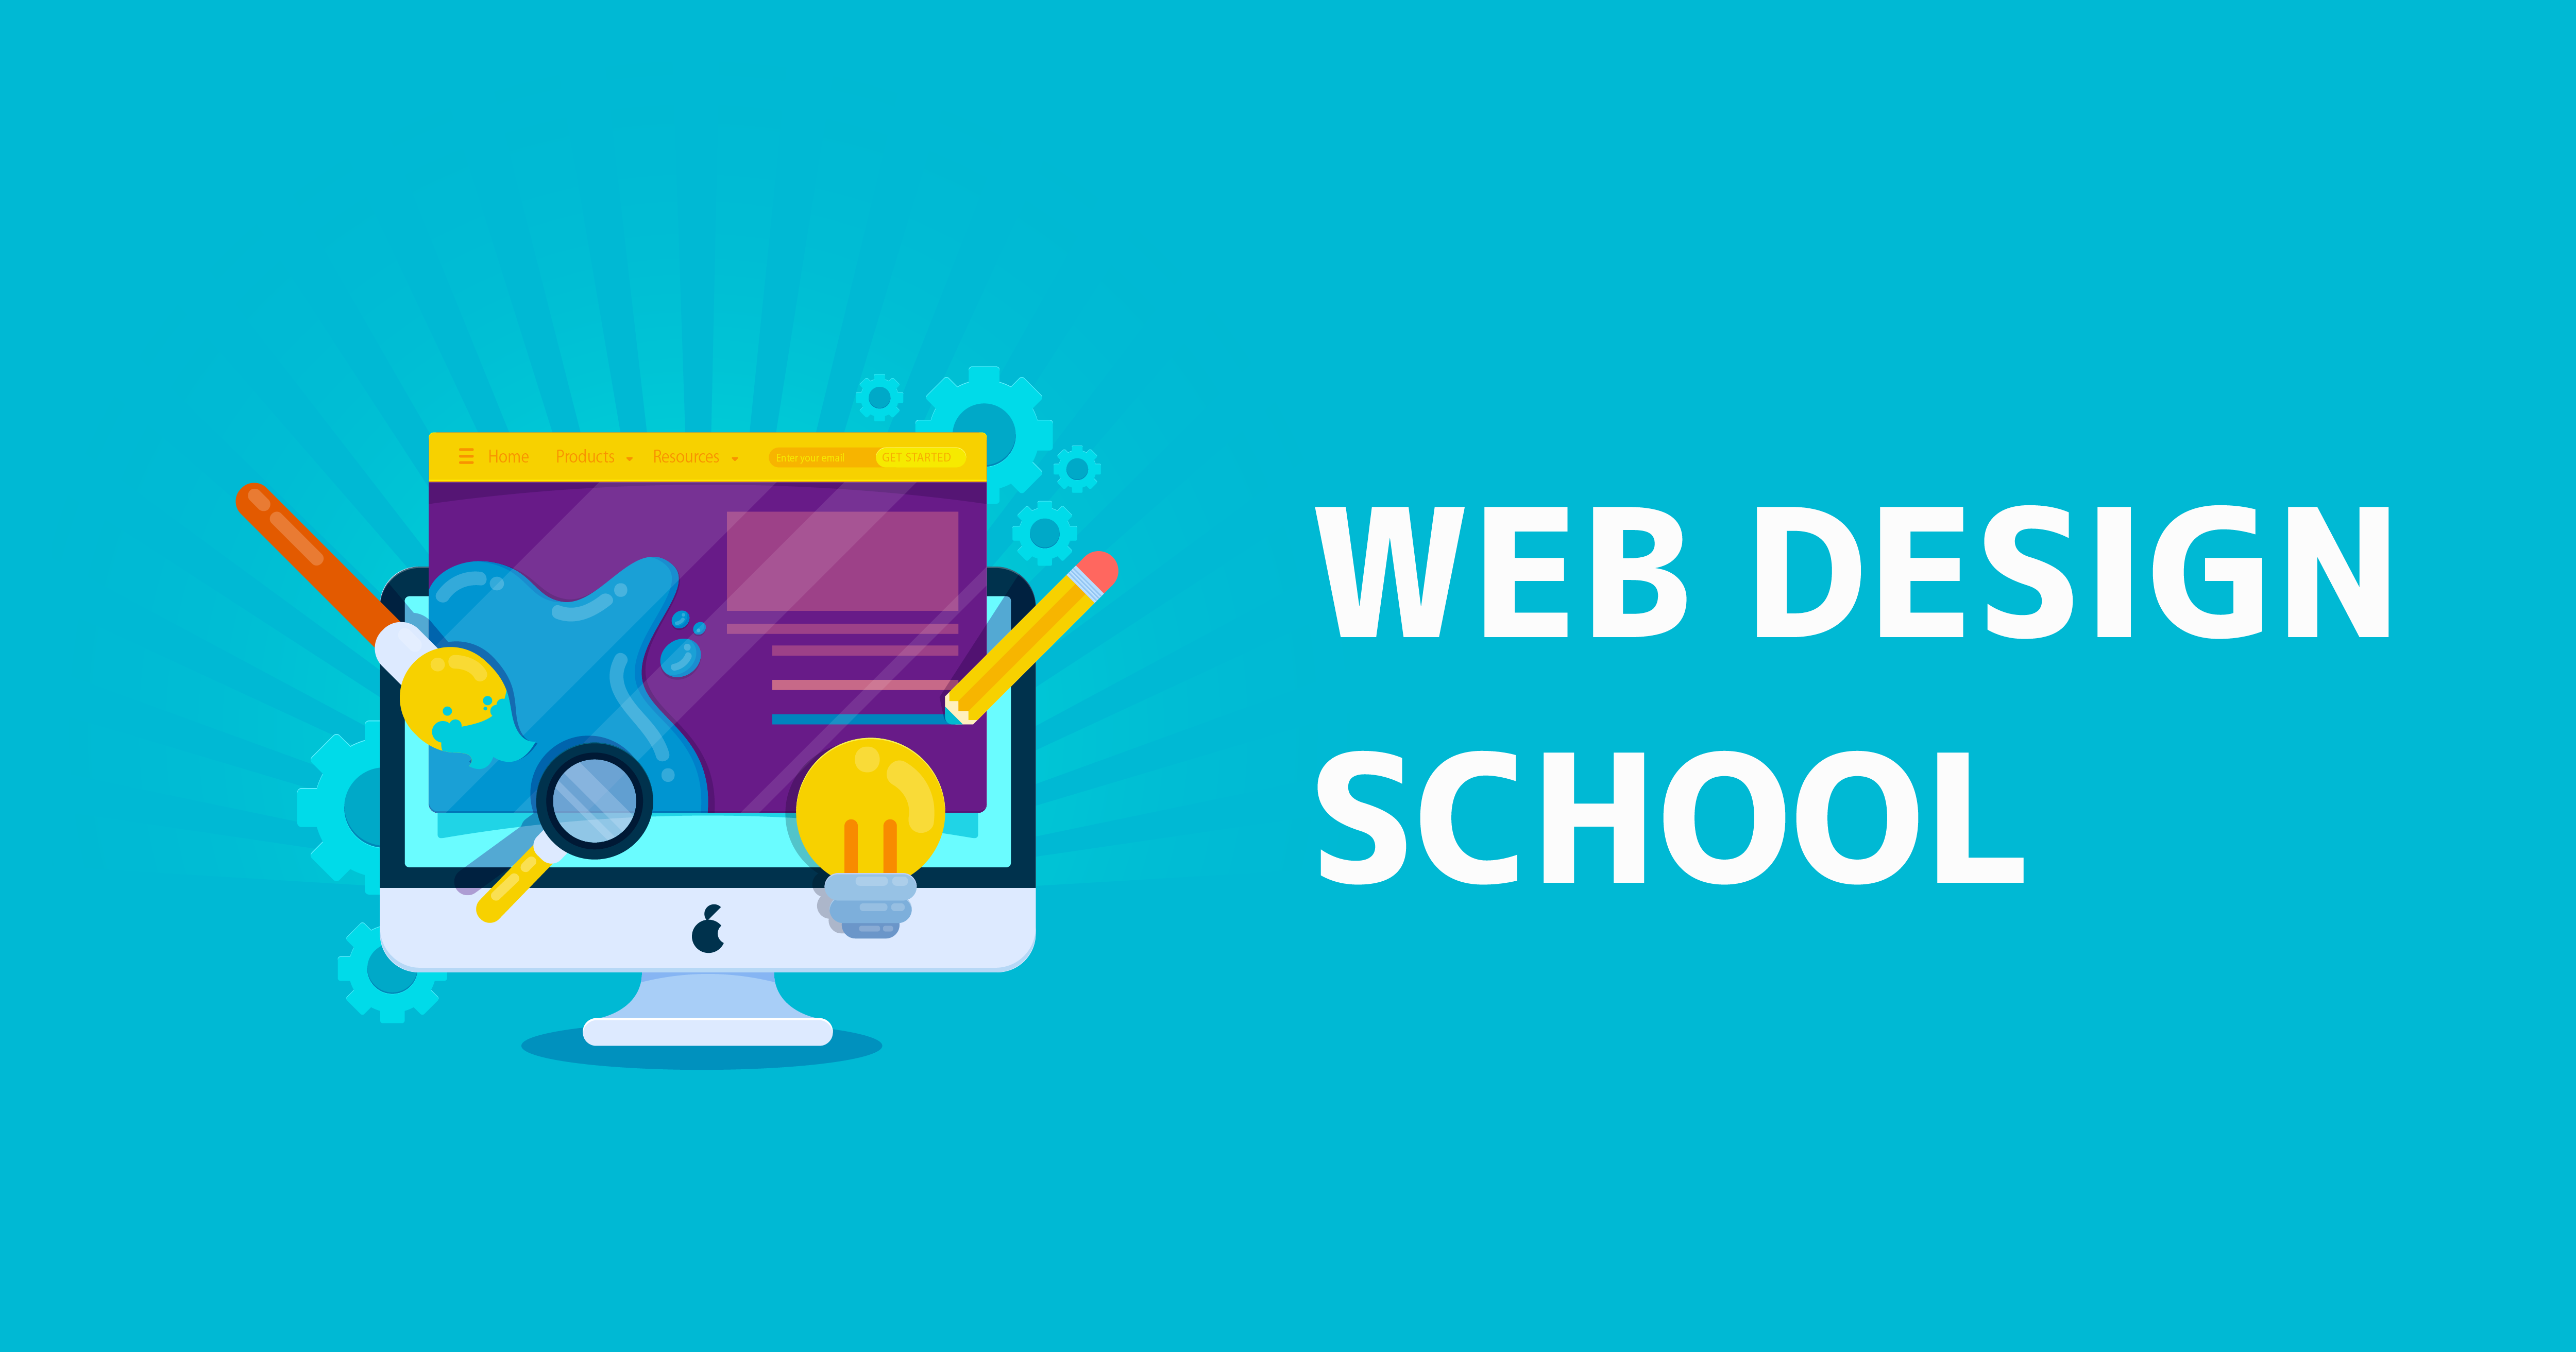 WEB DESIGN SCHOOL